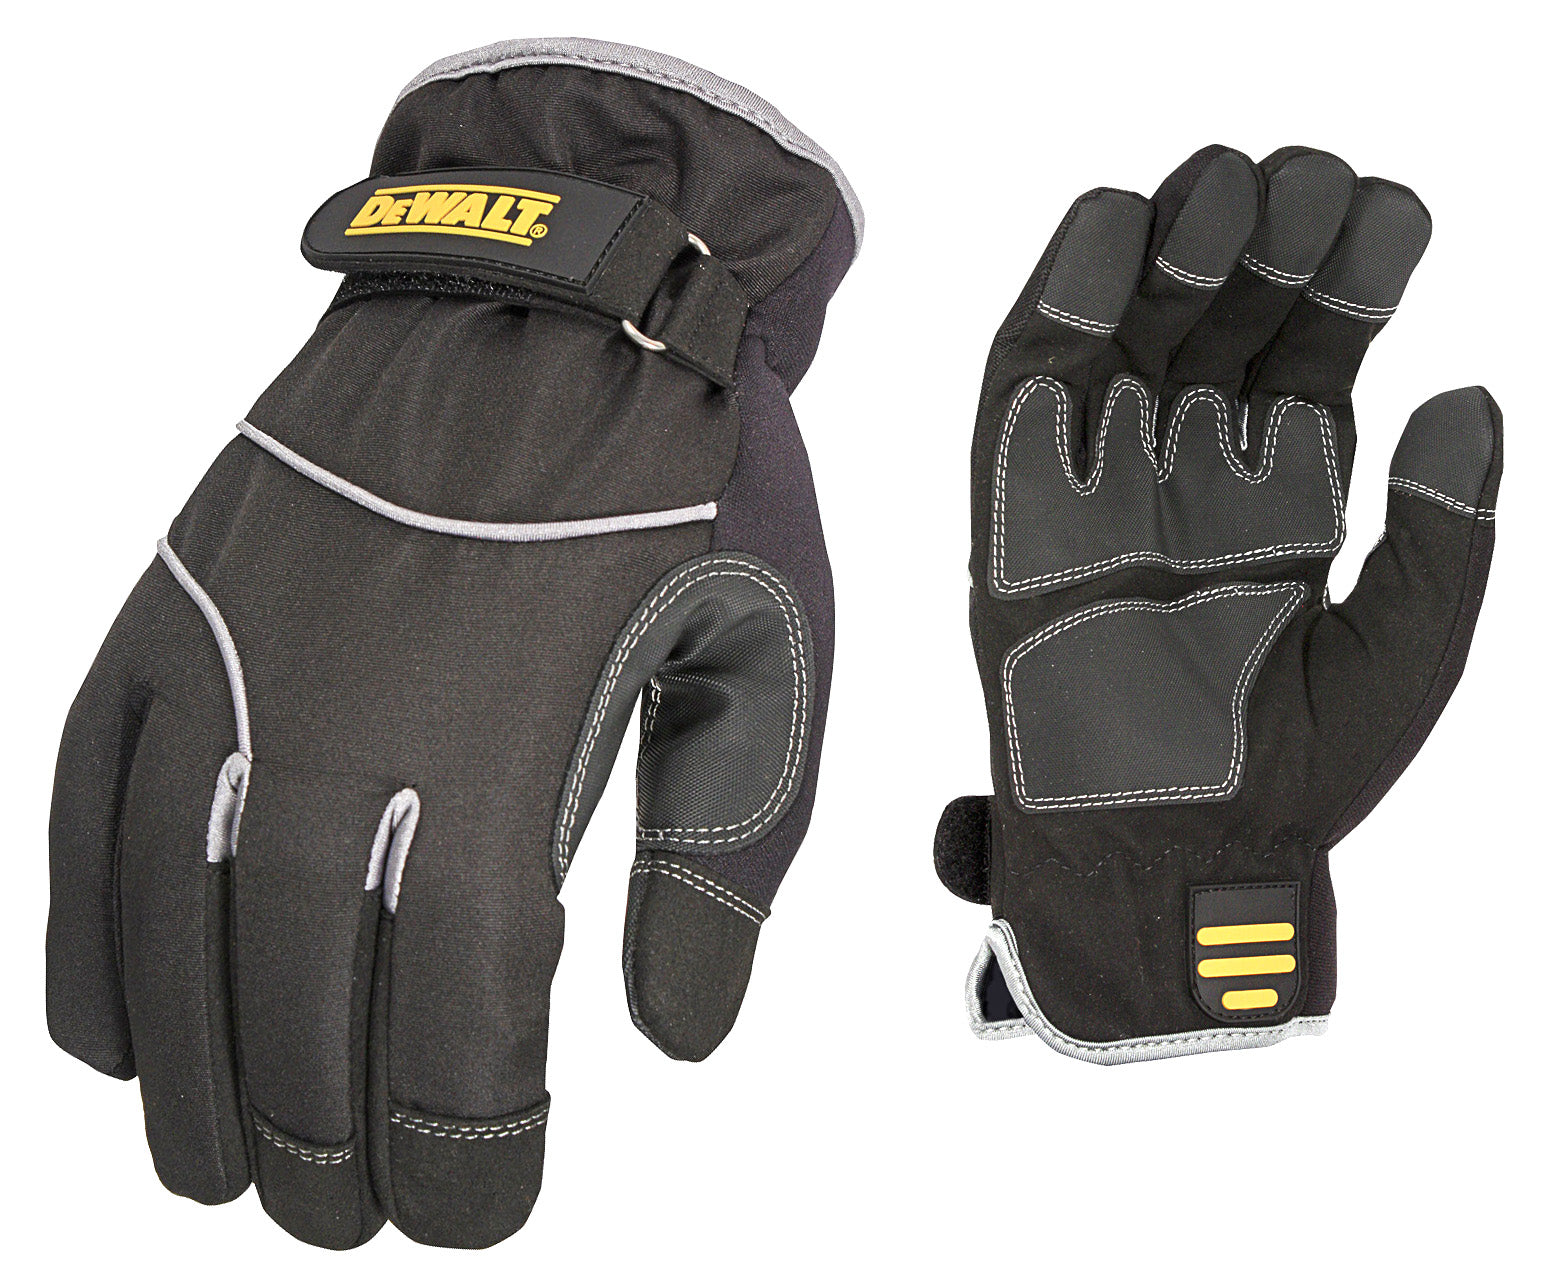 DEWALT DPG748 Wind & Water Resistant Cold Weather Glove